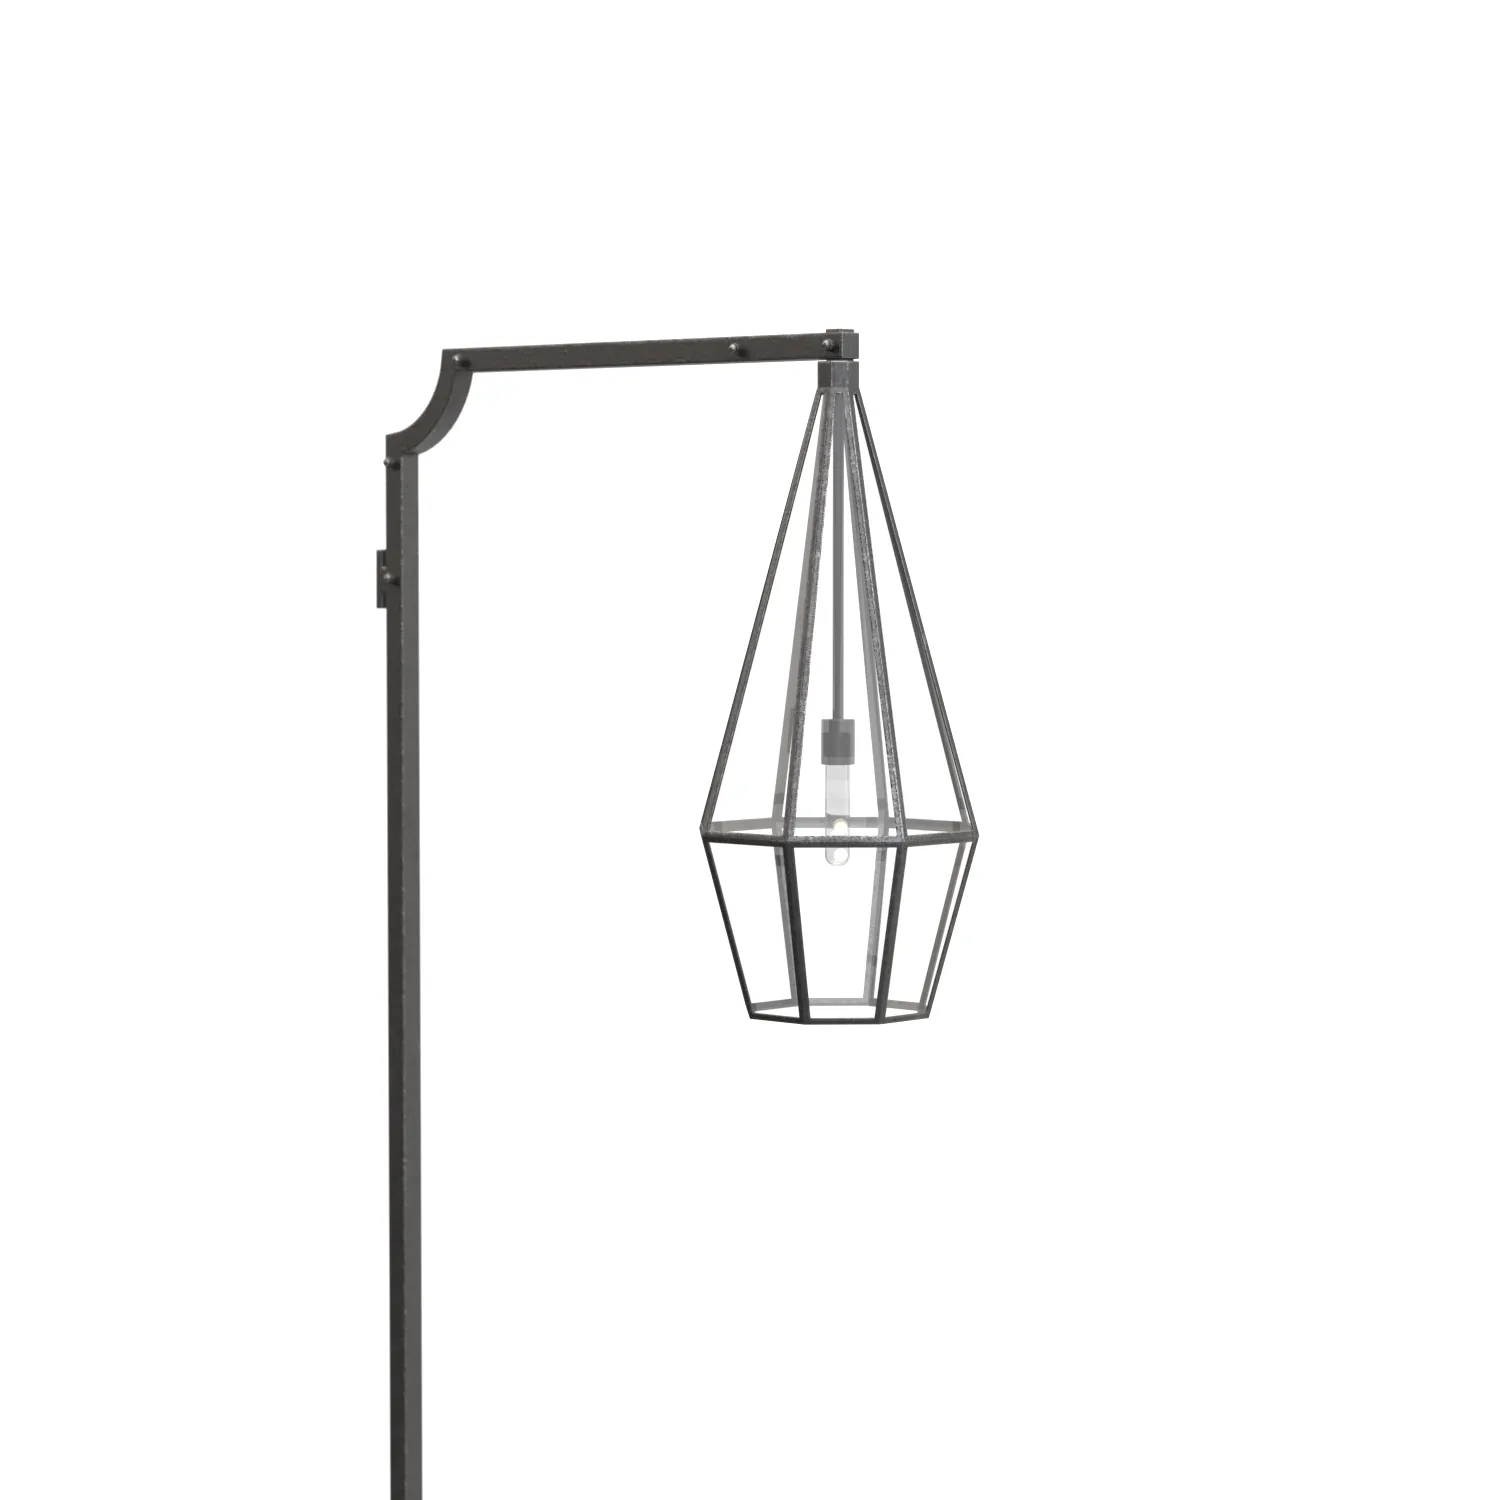 Exterior Street Lamp Light PBR 3D Model_05